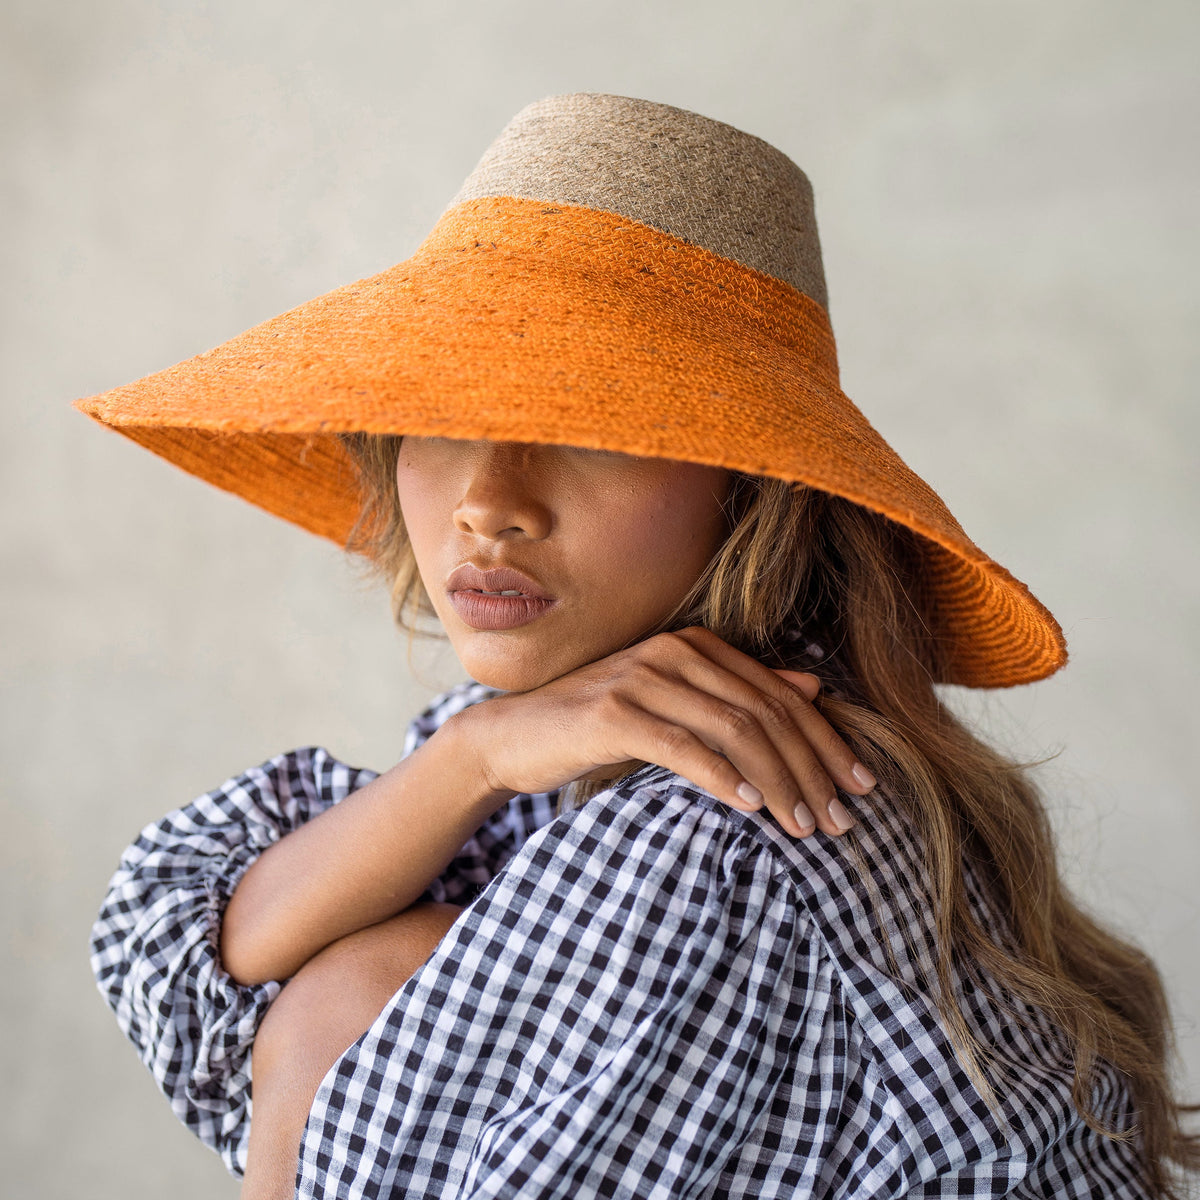 RIRI Duo Jute Handwoven Straw Hat In Pumpkin Orange